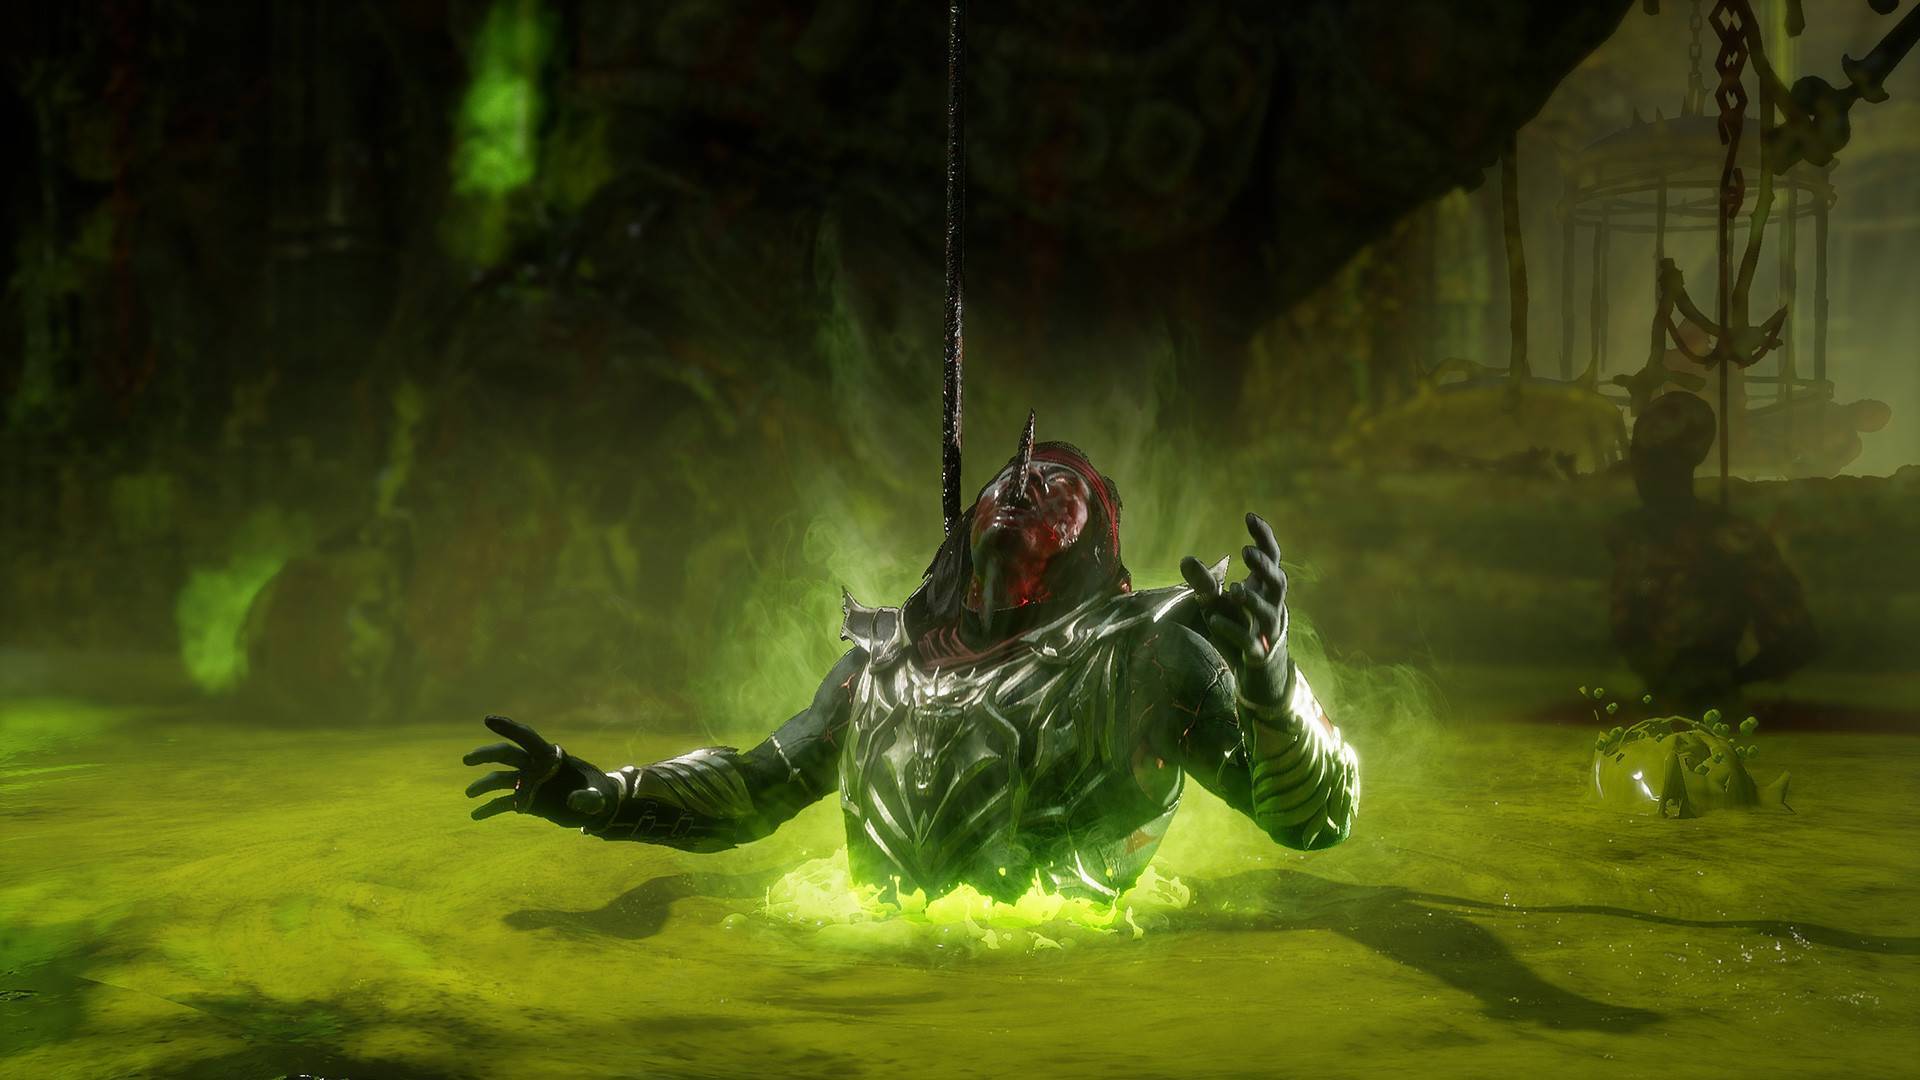 Nintendo Switch Mortal Kombat 11 Game Deals US Version for